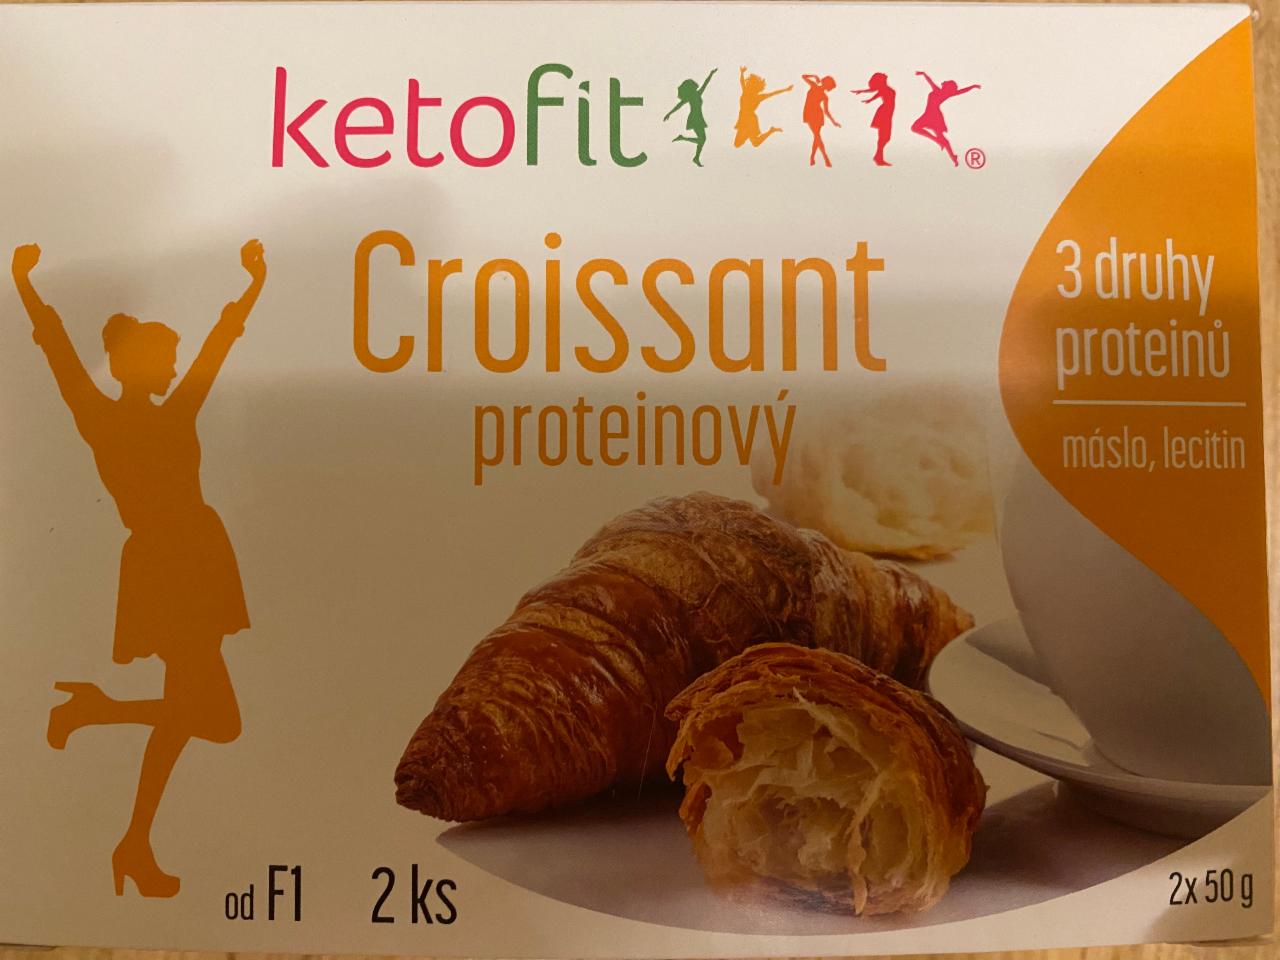 Fotografie - Croissant proteinový KetoFit